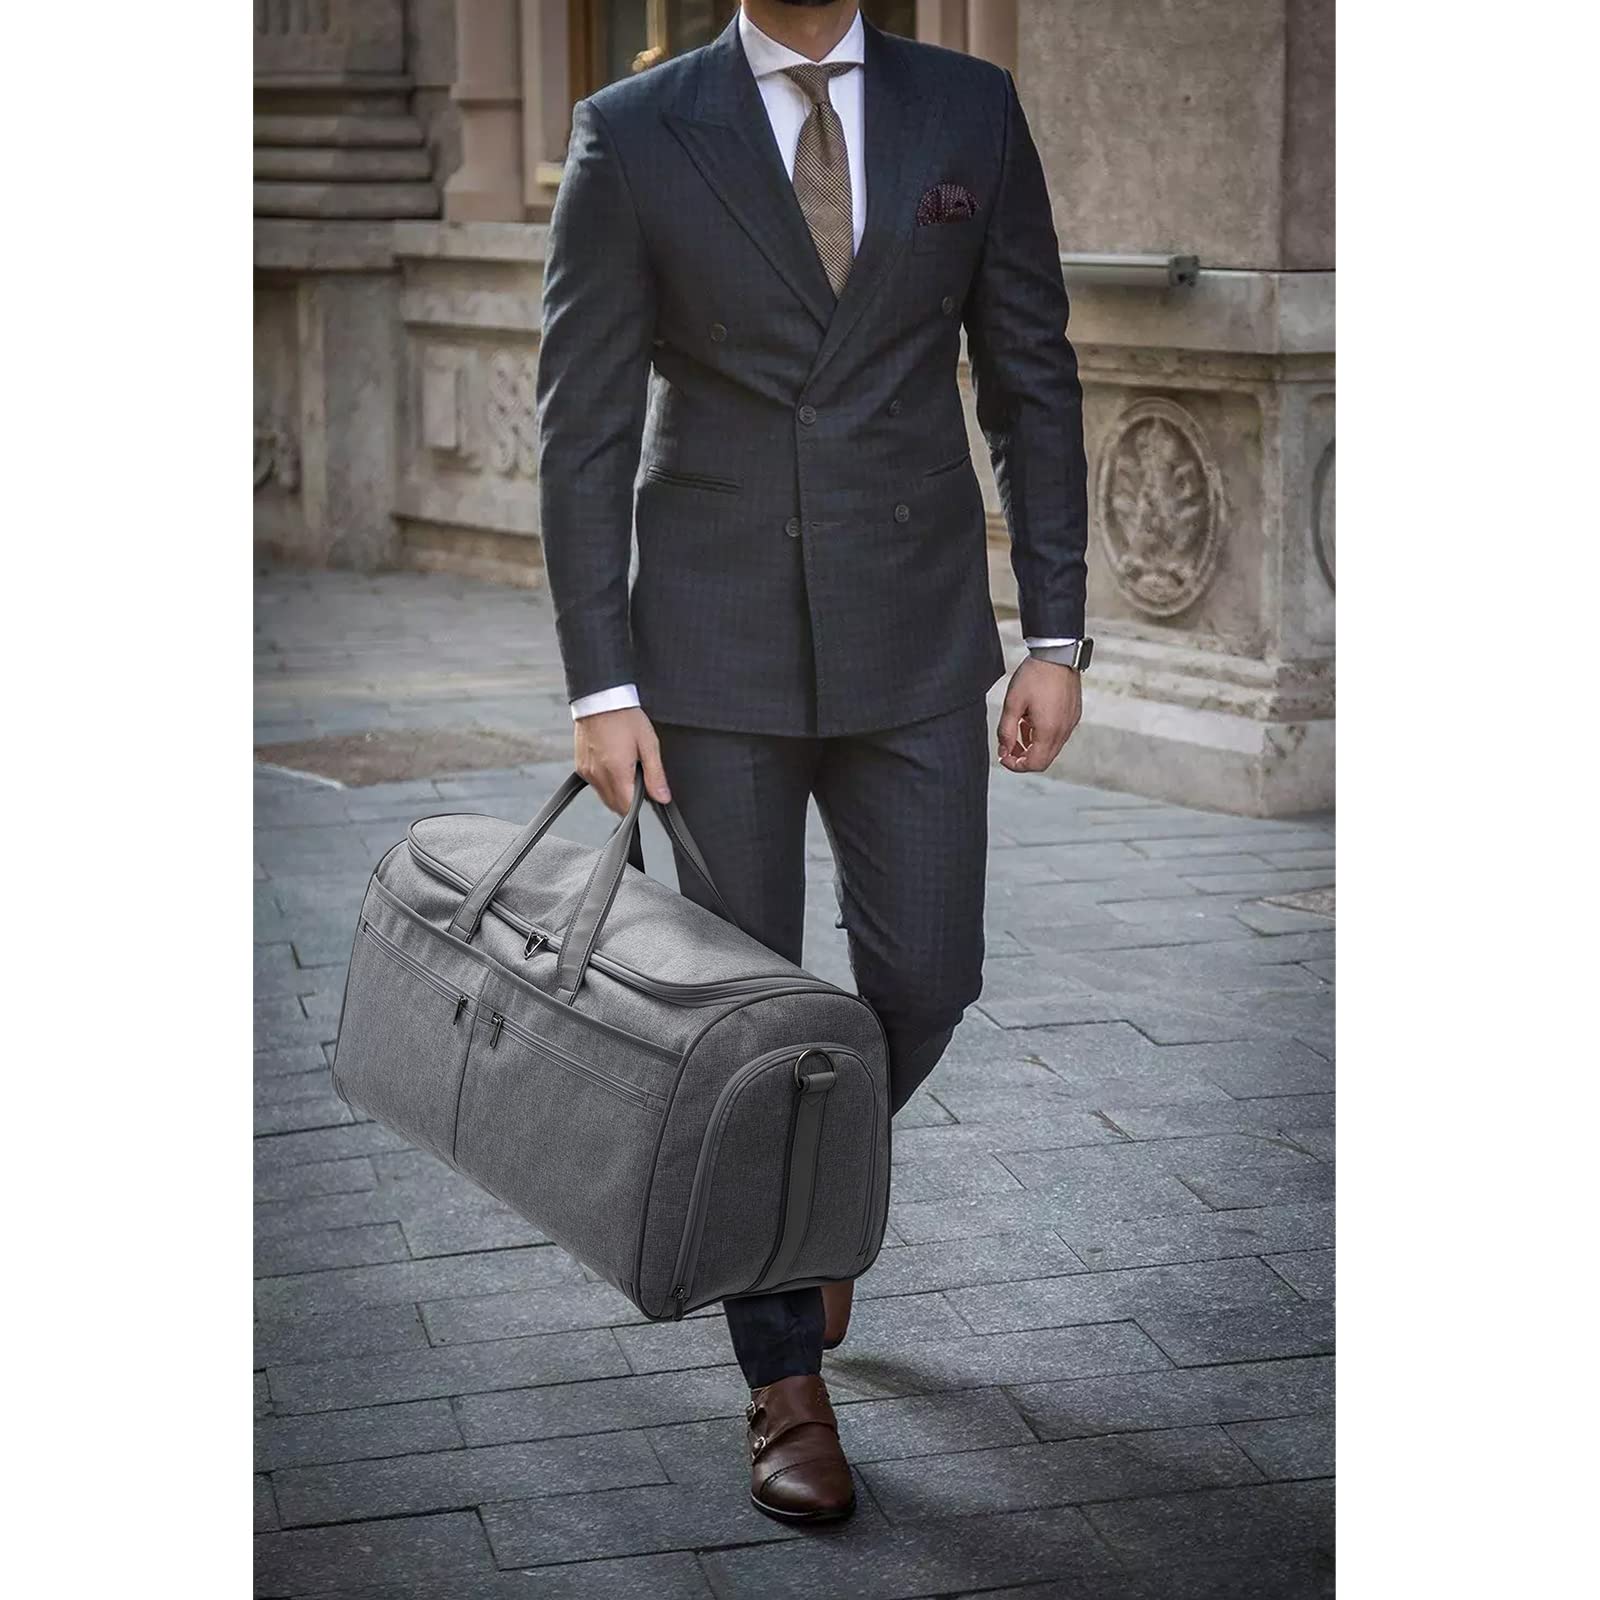 50L Carry on Garment Duffel Bag for Men